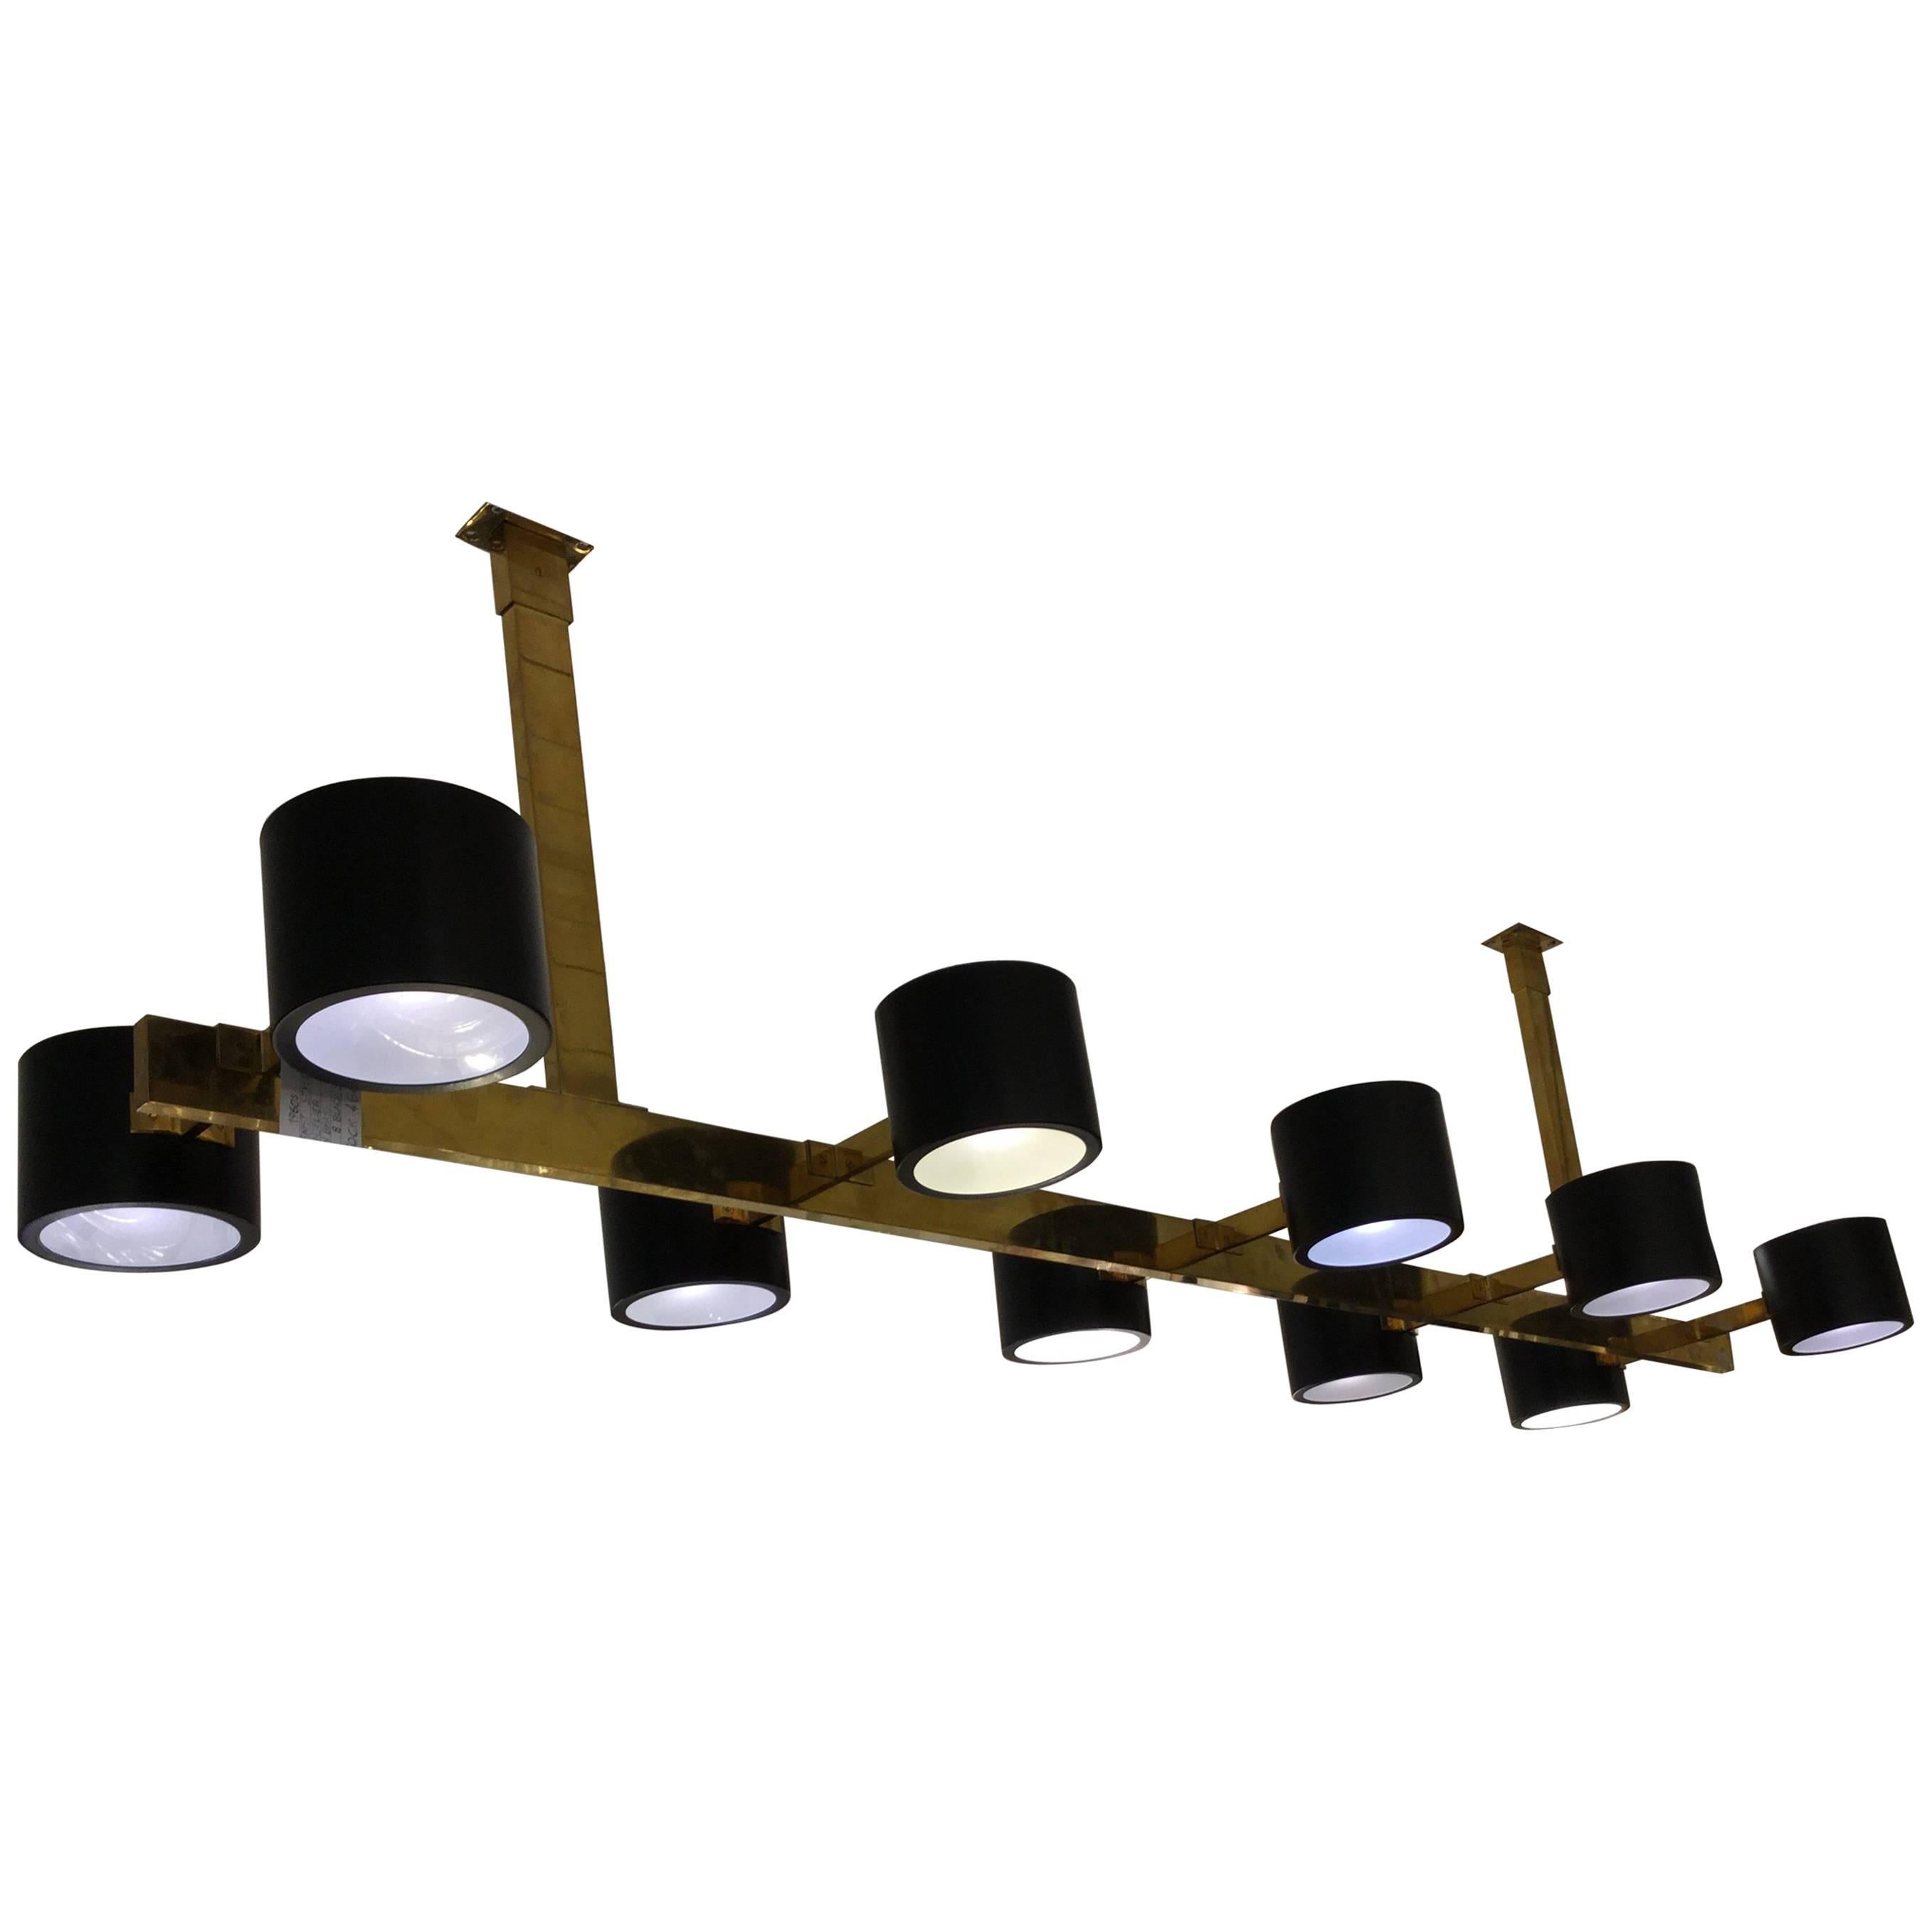 Italian Oversized Modernist Design Light Fixture with Ten Shades in Brass